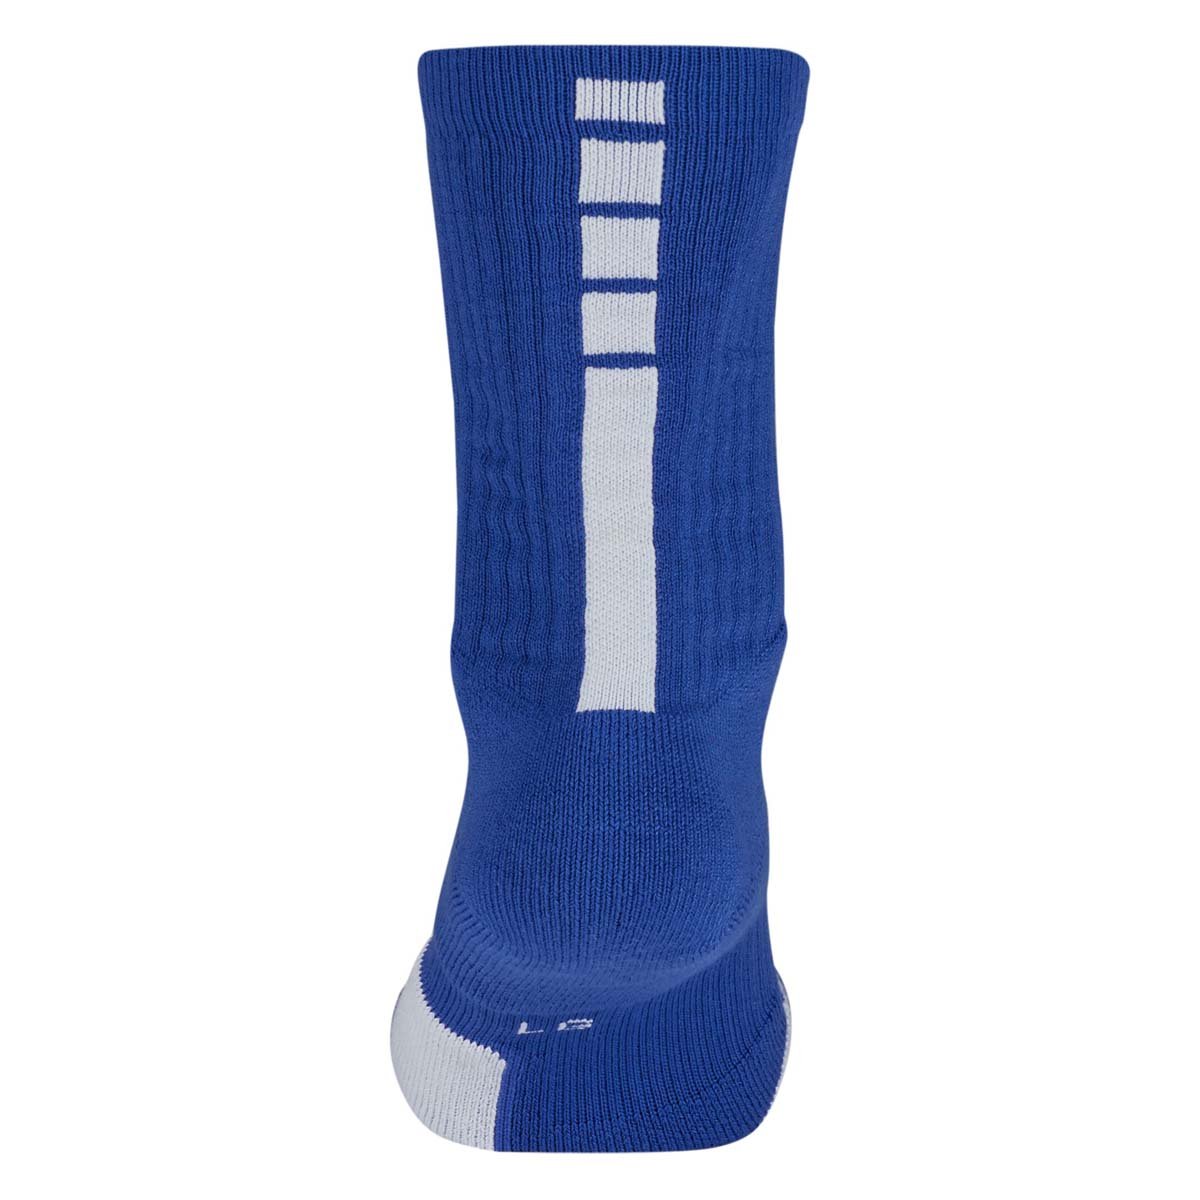 Nike Elite Crew Basketball Socks - Shoes